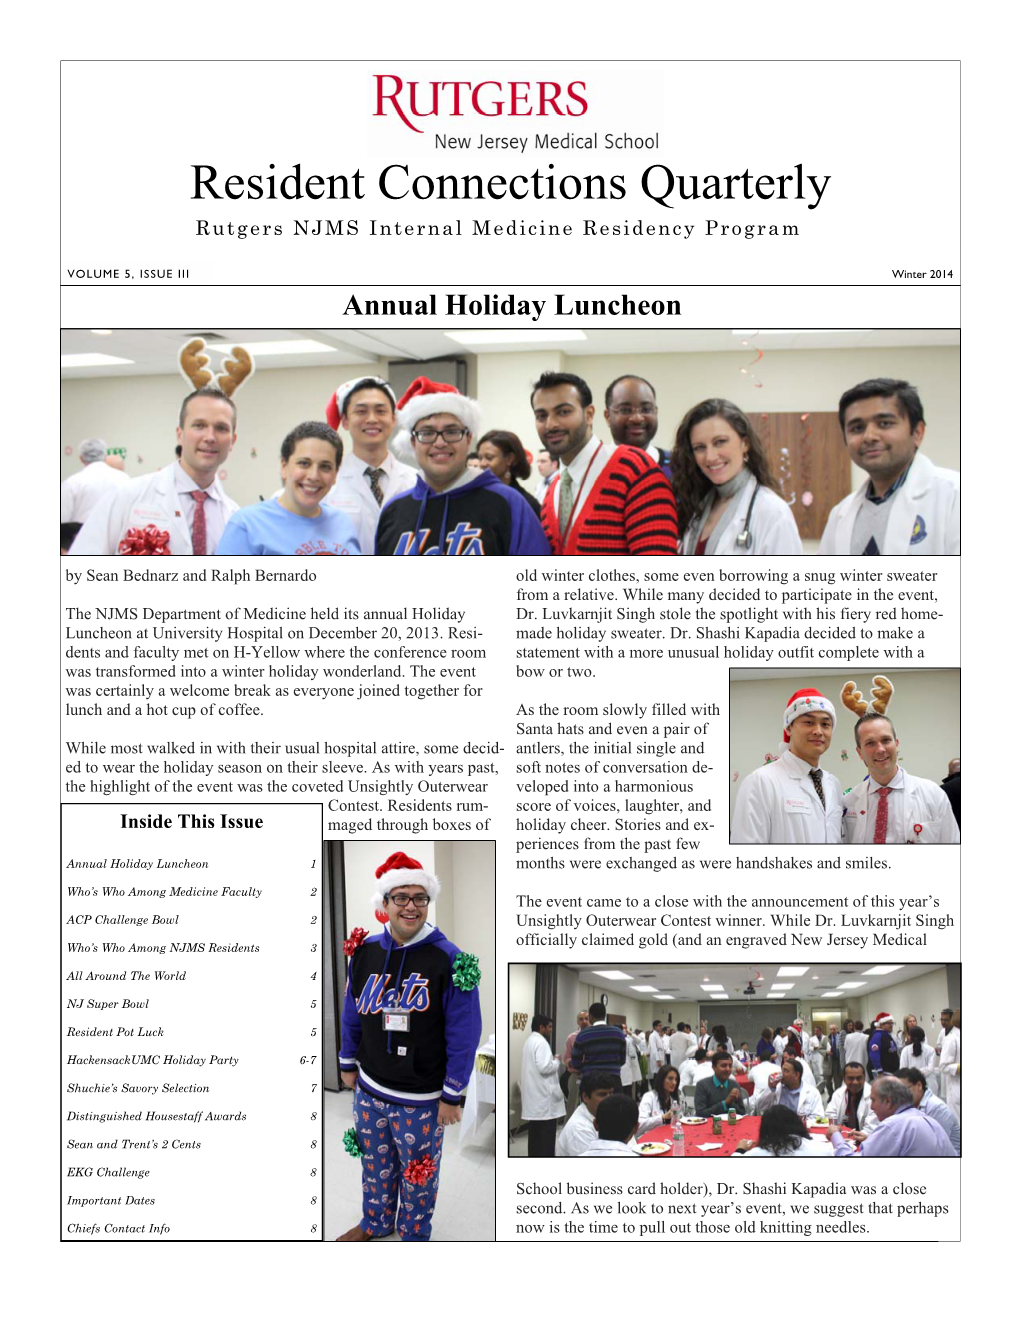 Resident Connections Quarterly Rutgers NJMS Internal Medicine Residency Program